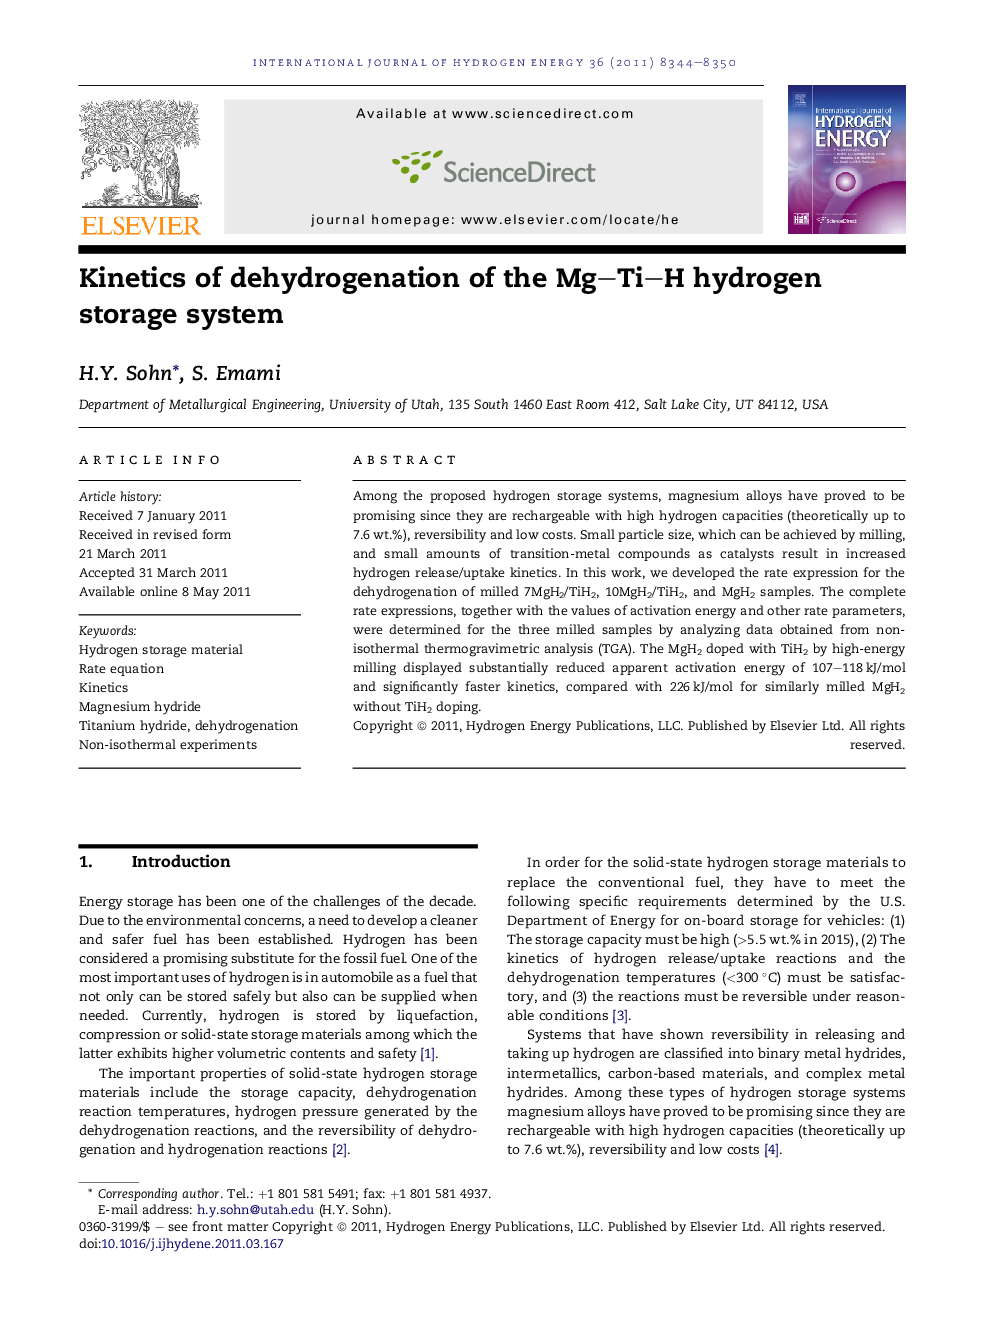 Kinetics of dehydrogenation of the Mg–Ti–H hydrogen storage system